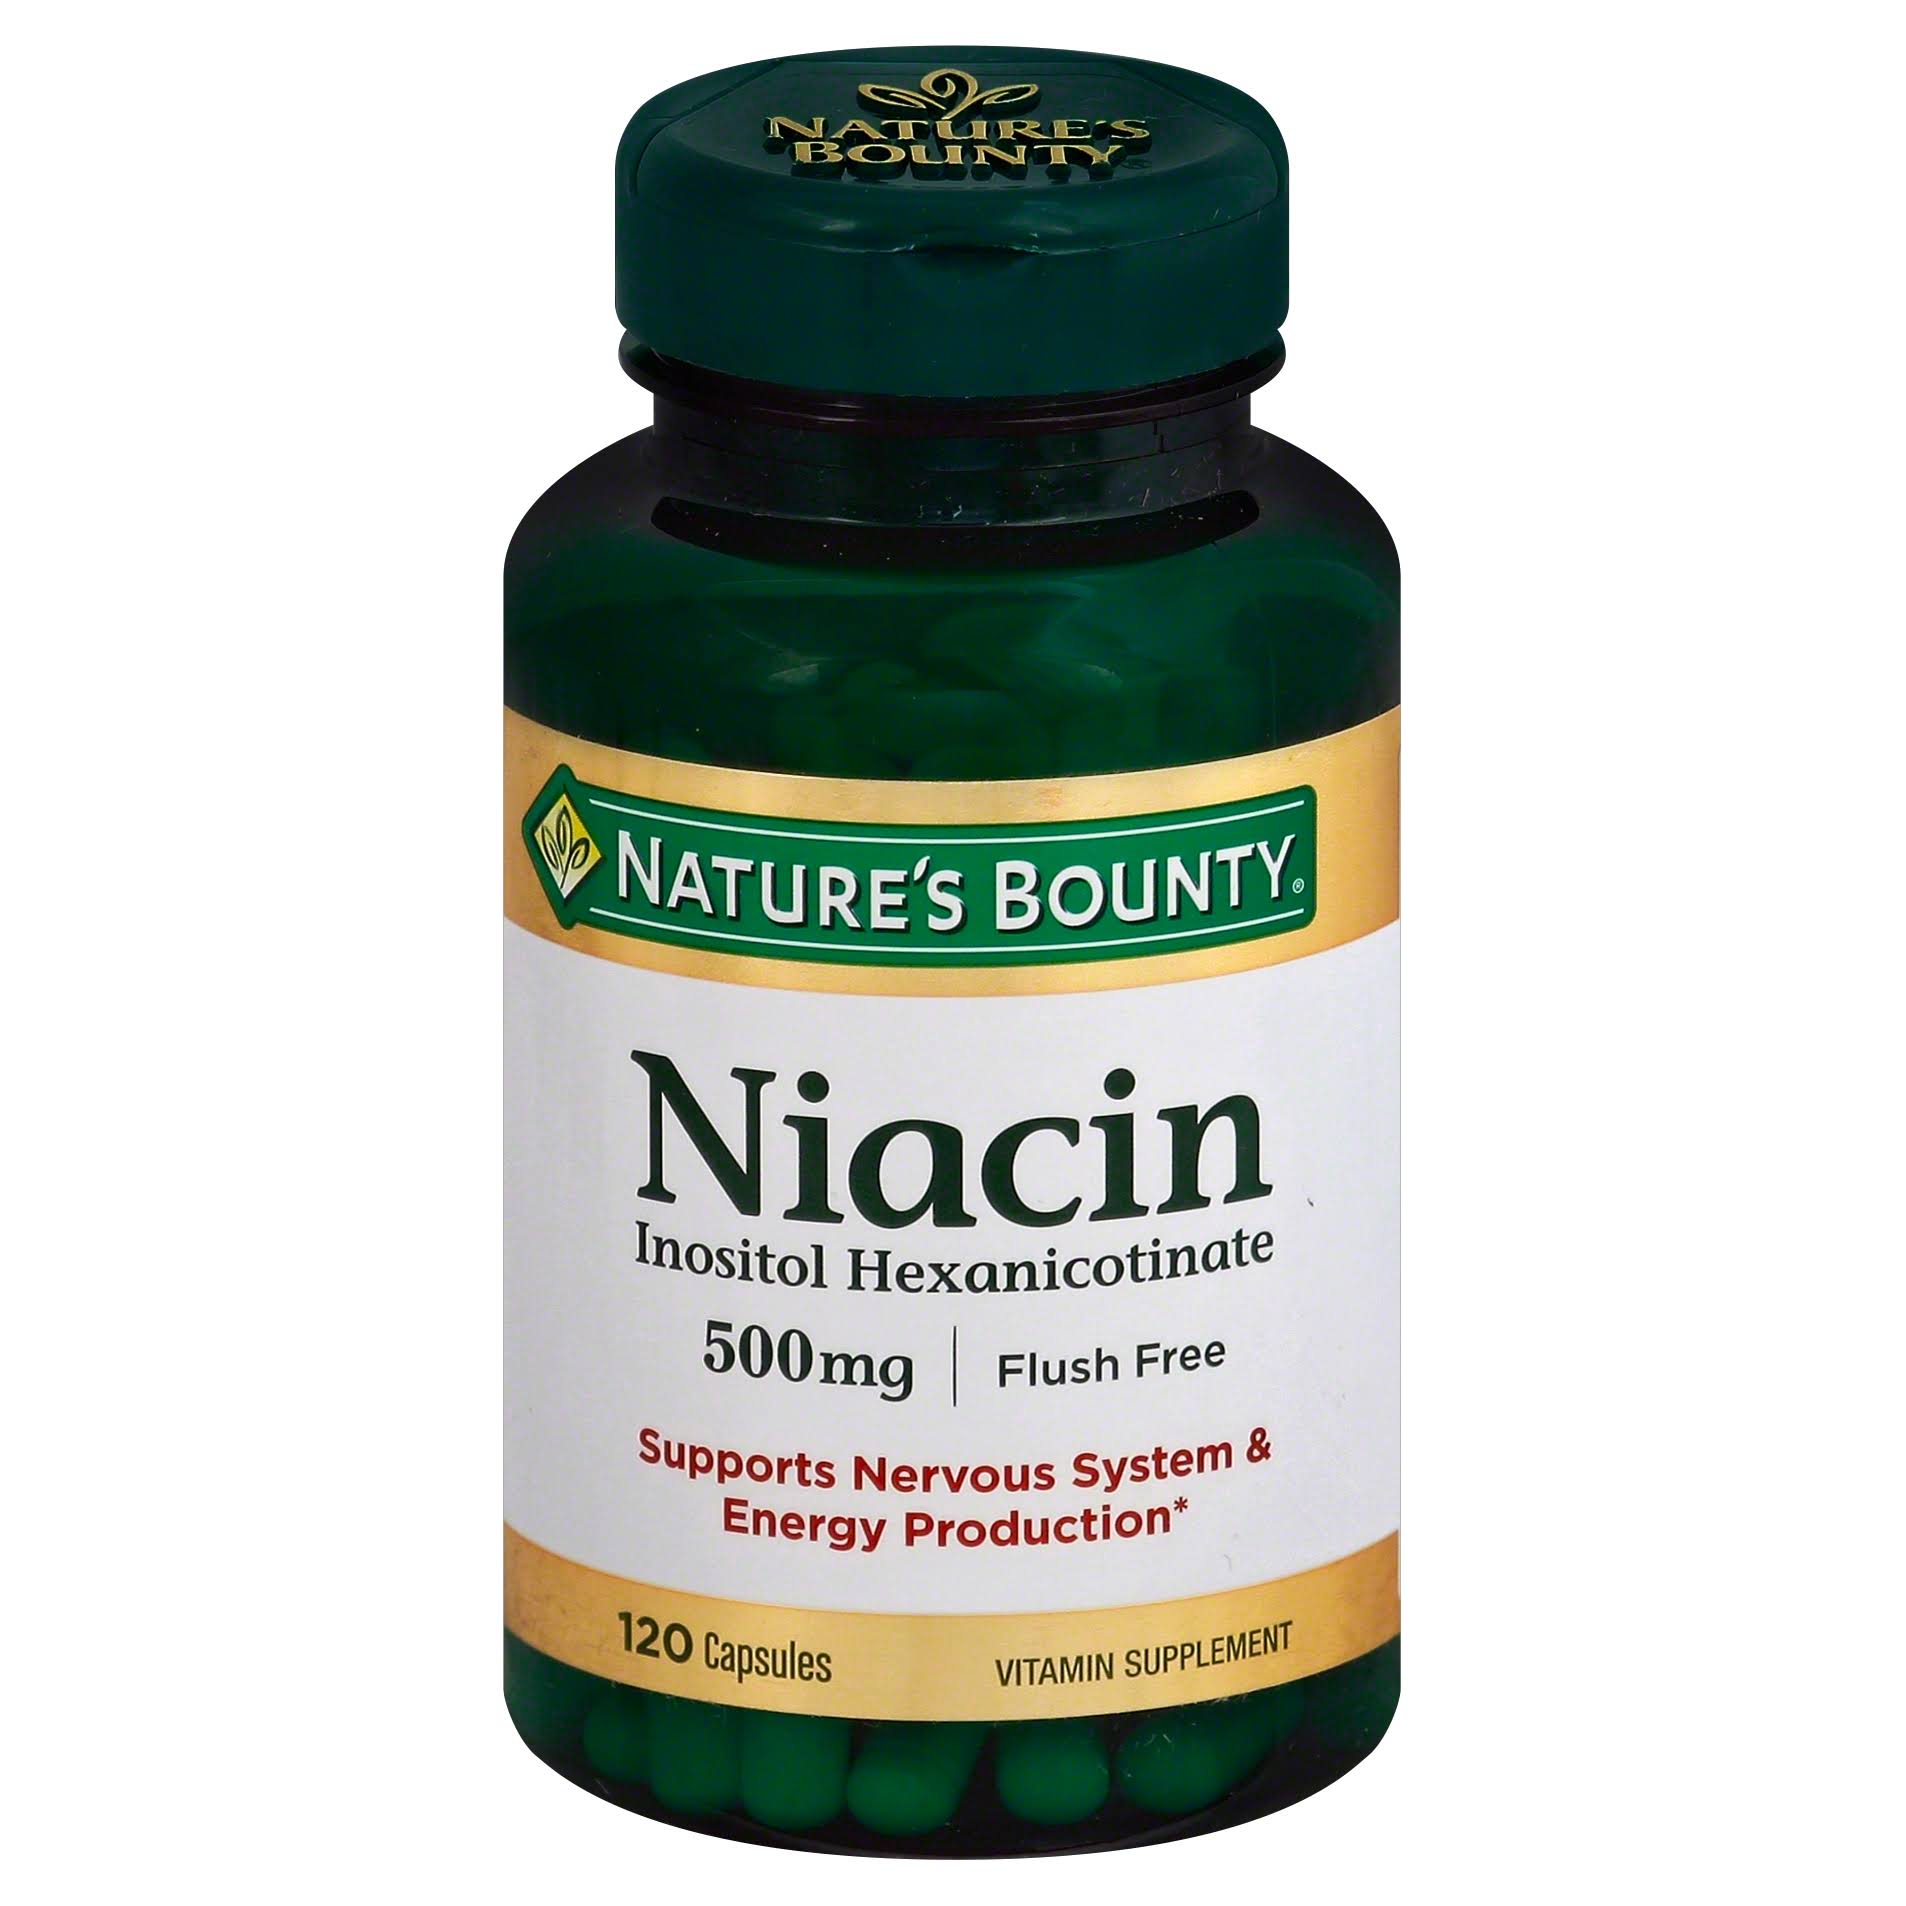 Nature's Bounty Niacin Capsules - 500mg, 120pk